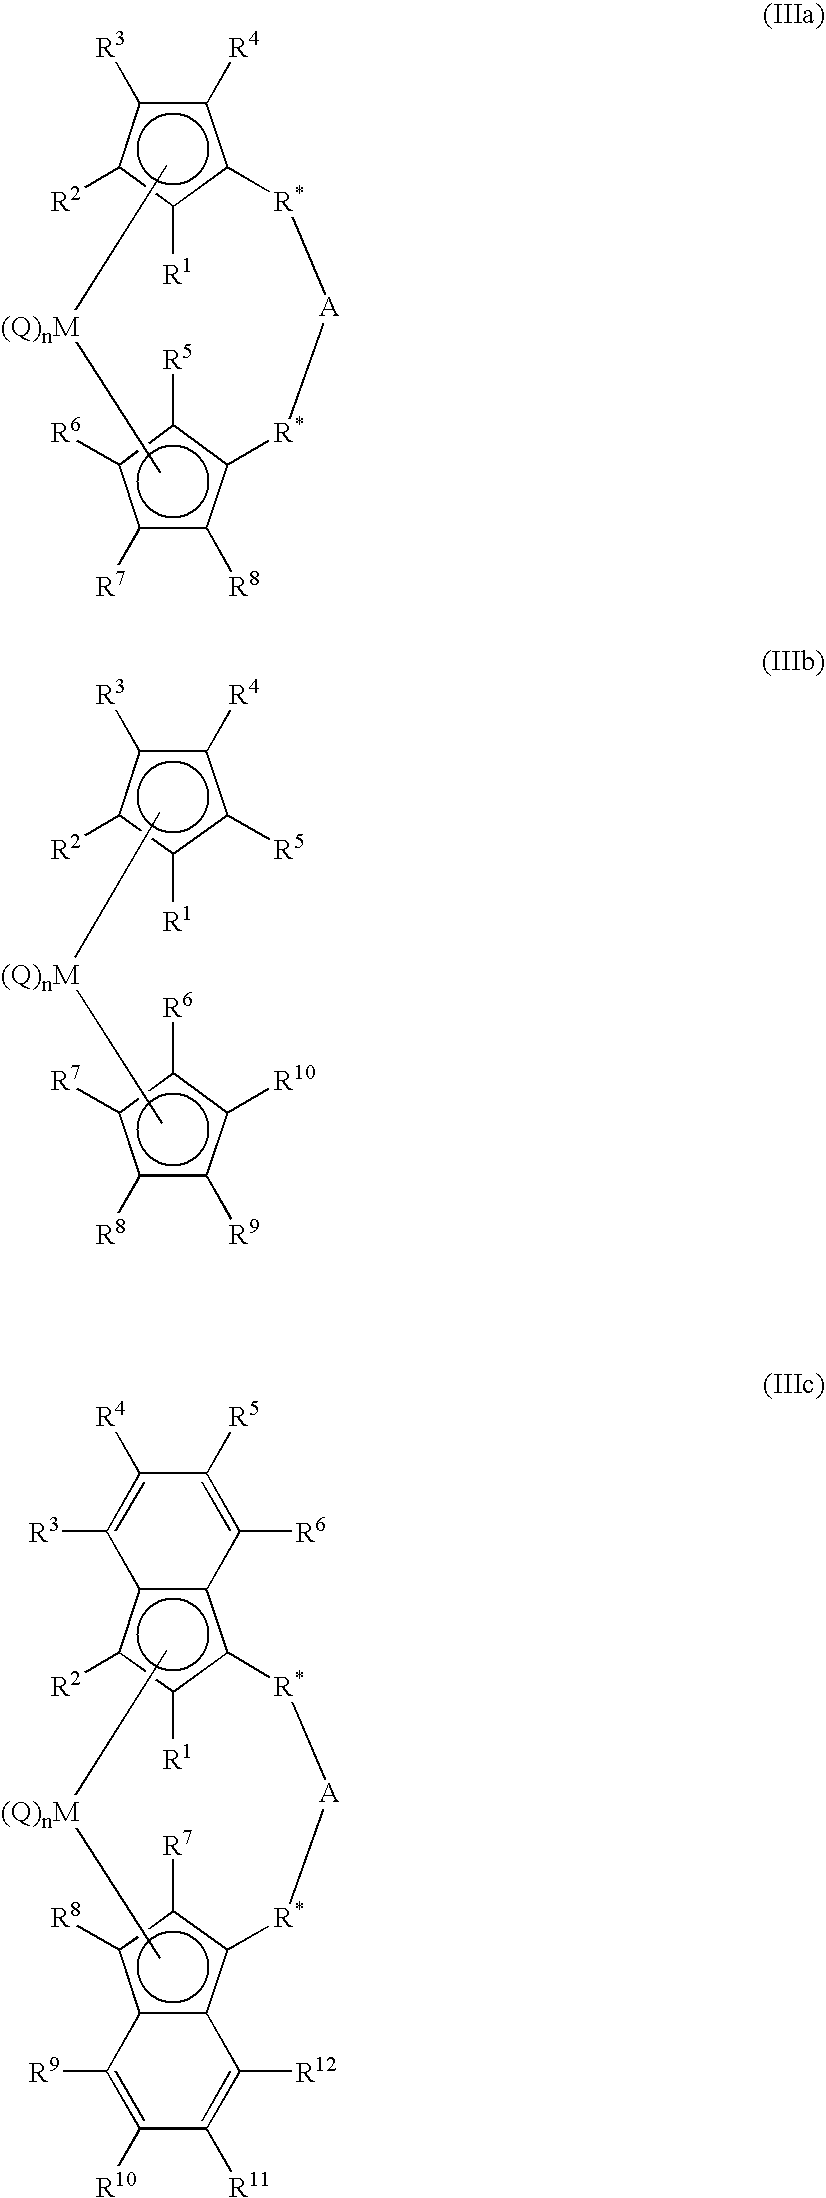 Polymerization process using a metallocene catalyst system